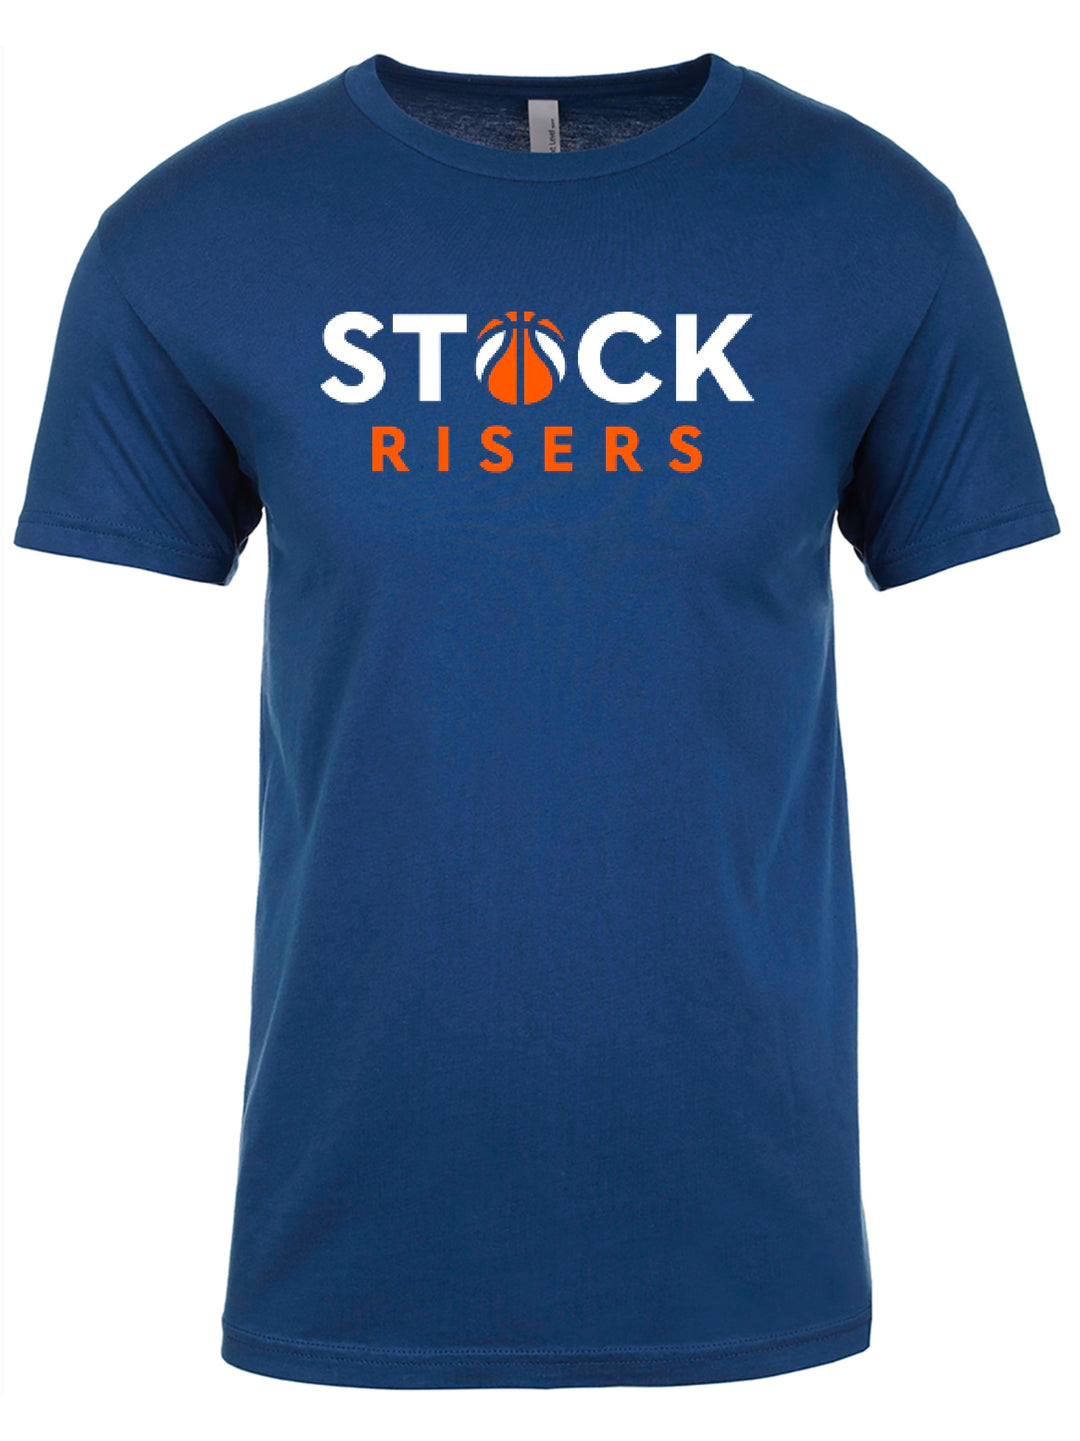 Stock Risers Unisex T-Shirt